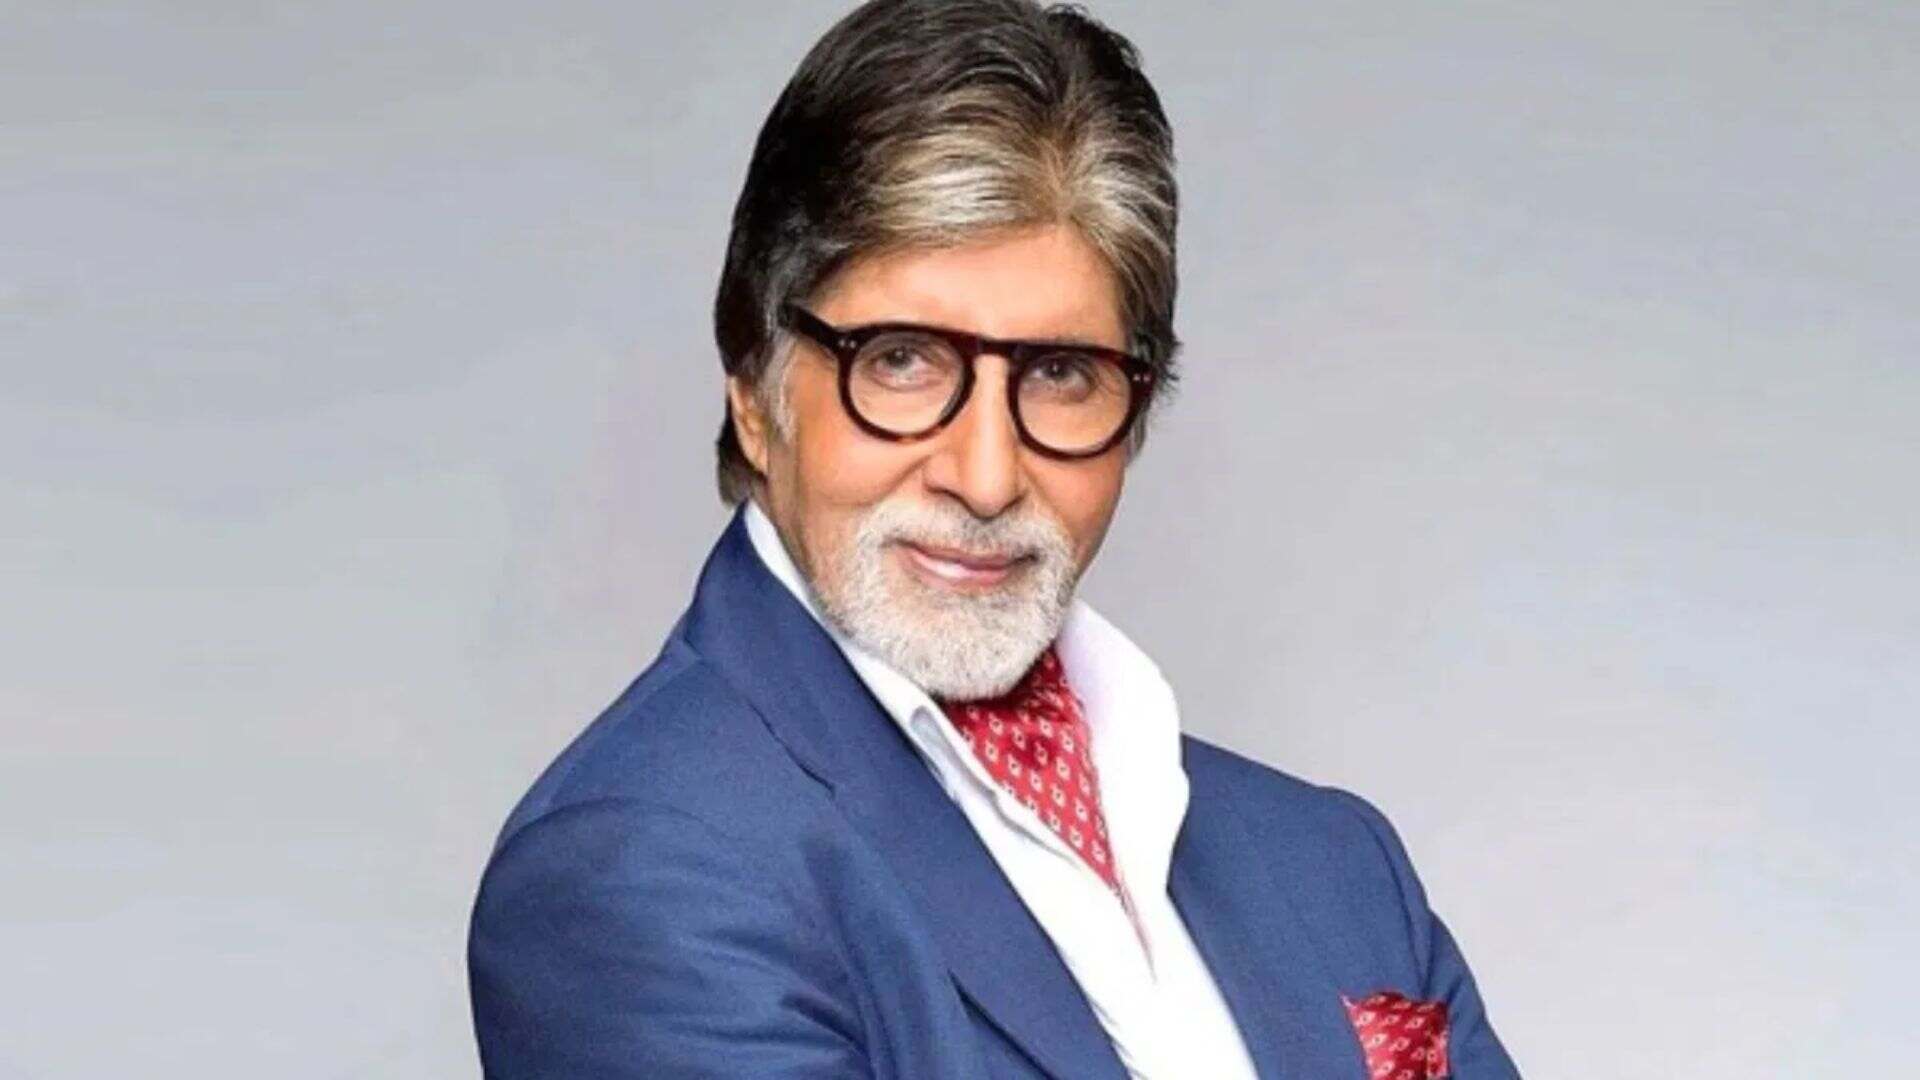 Amitabh Bachchan is set to receive the Lata Dinanath Mangeshkar award